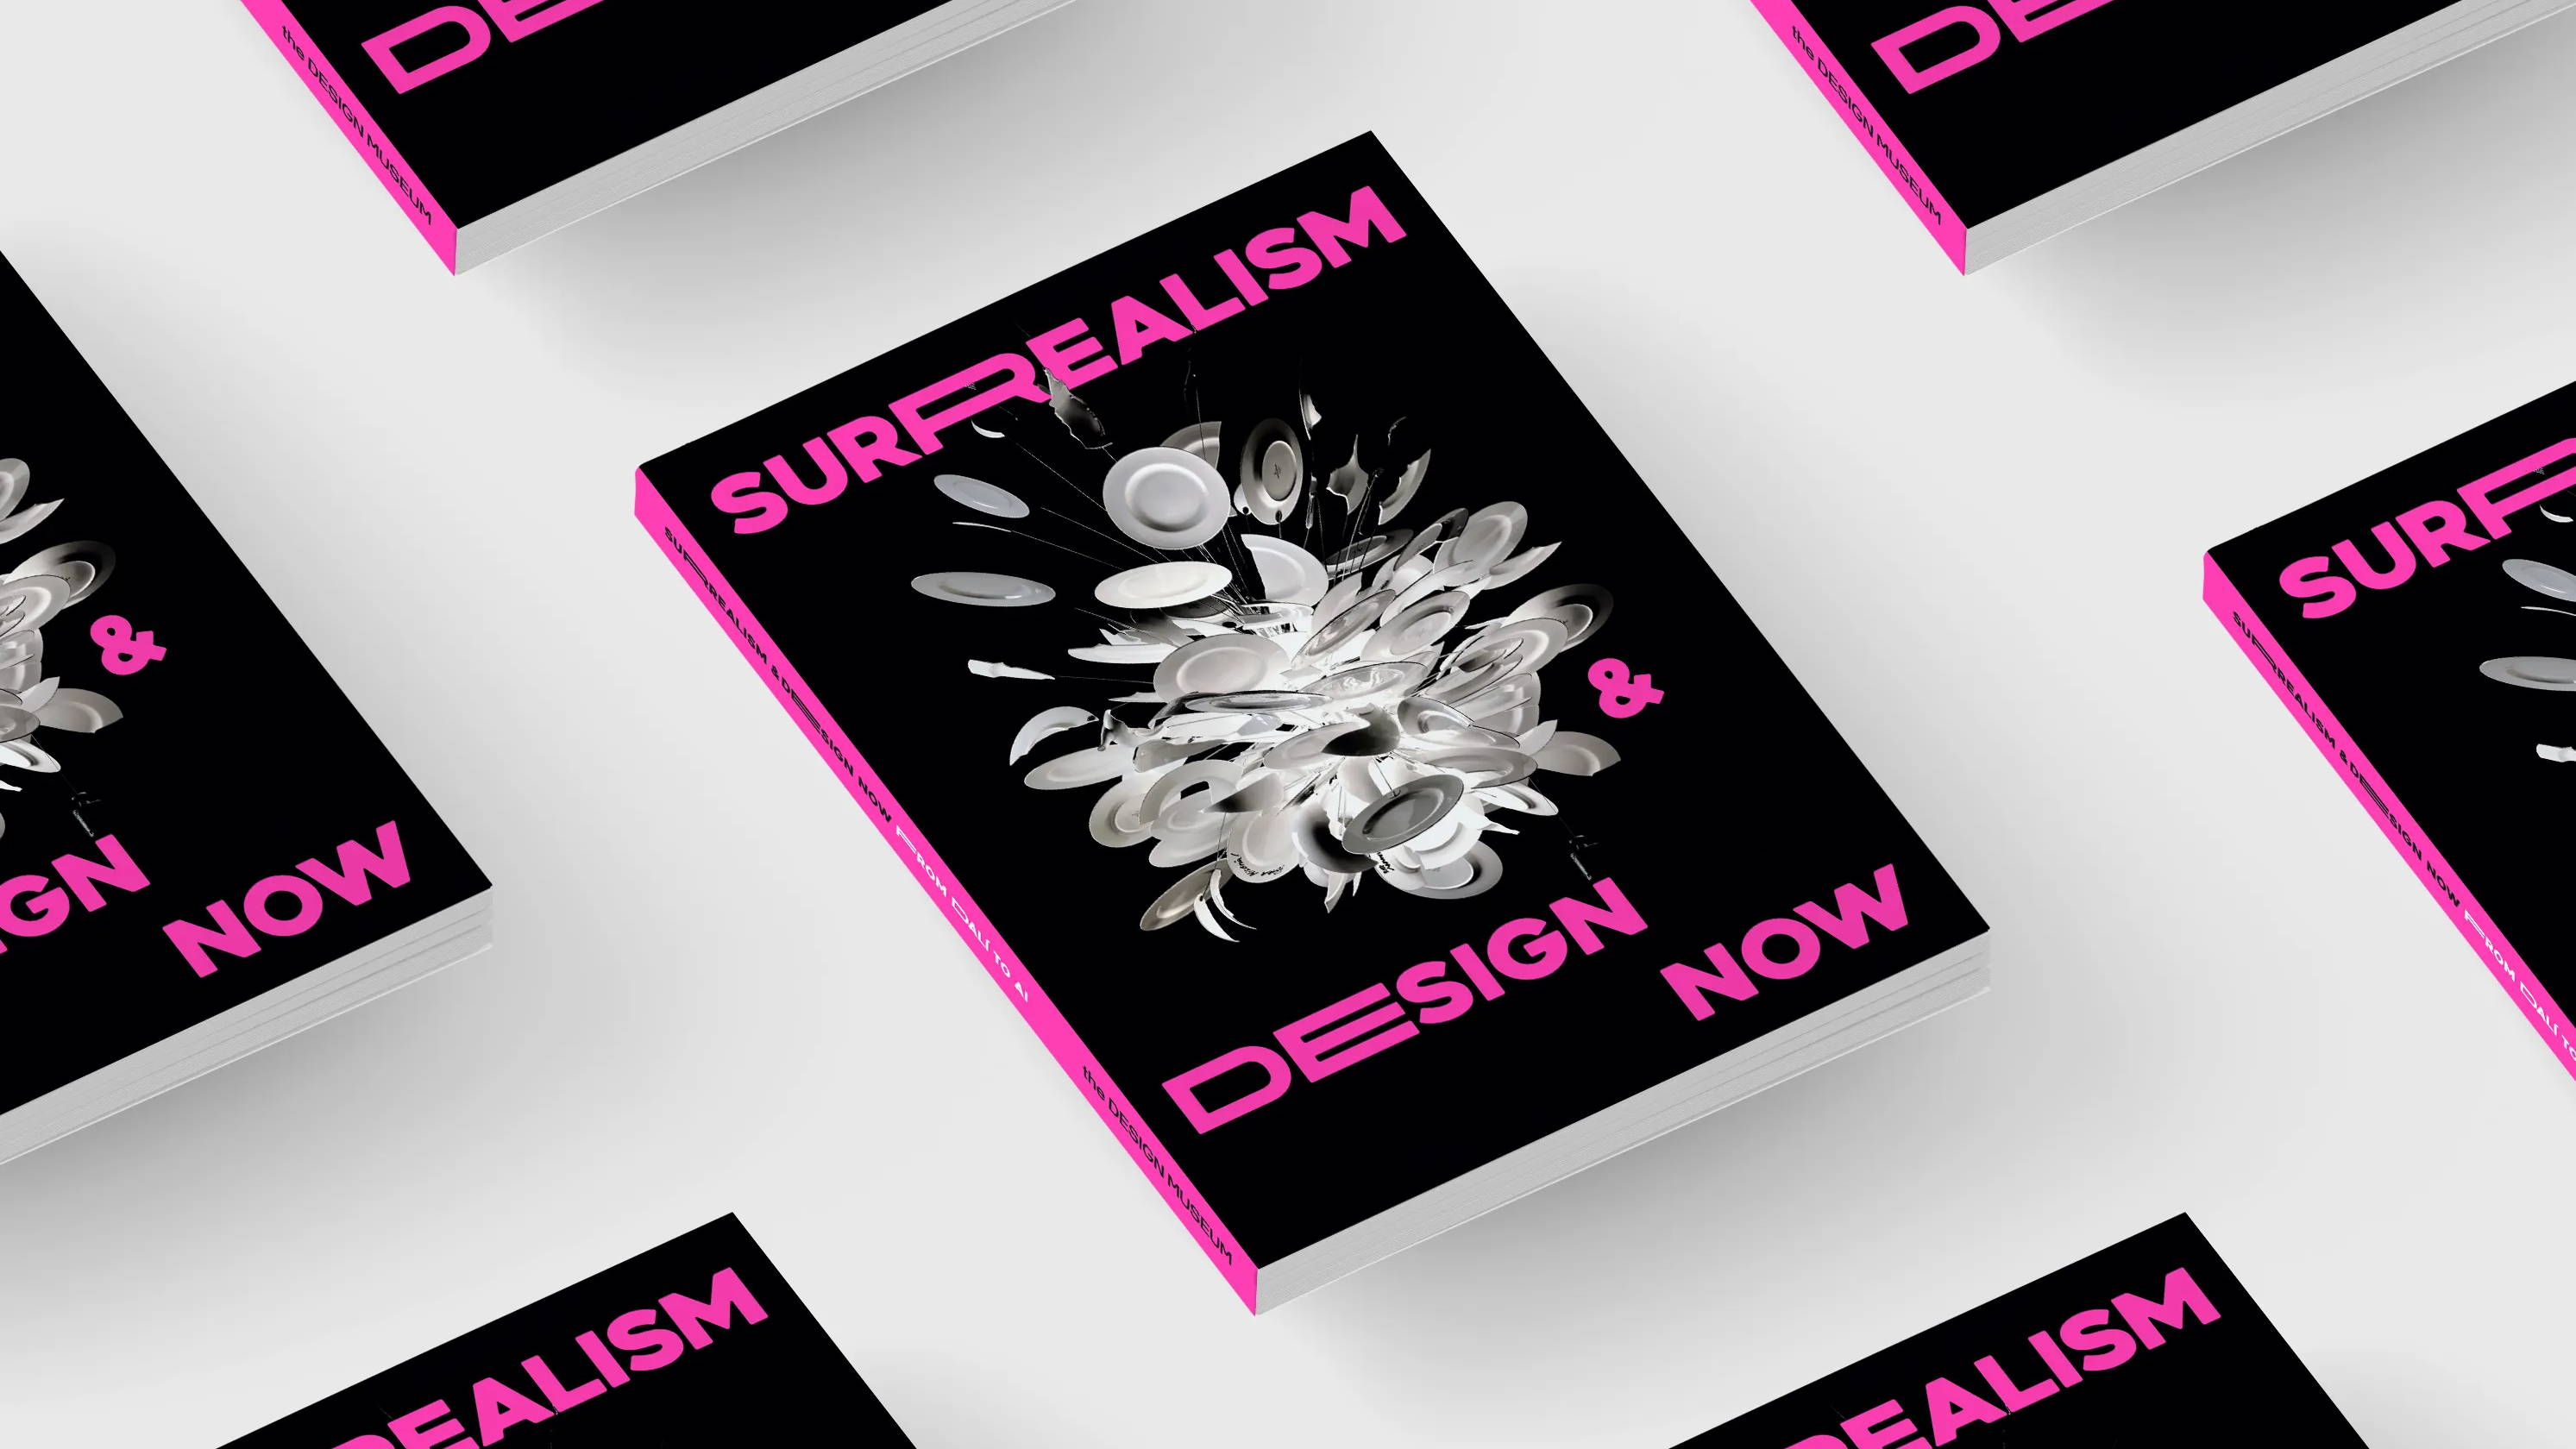 Surrealism & Design Now